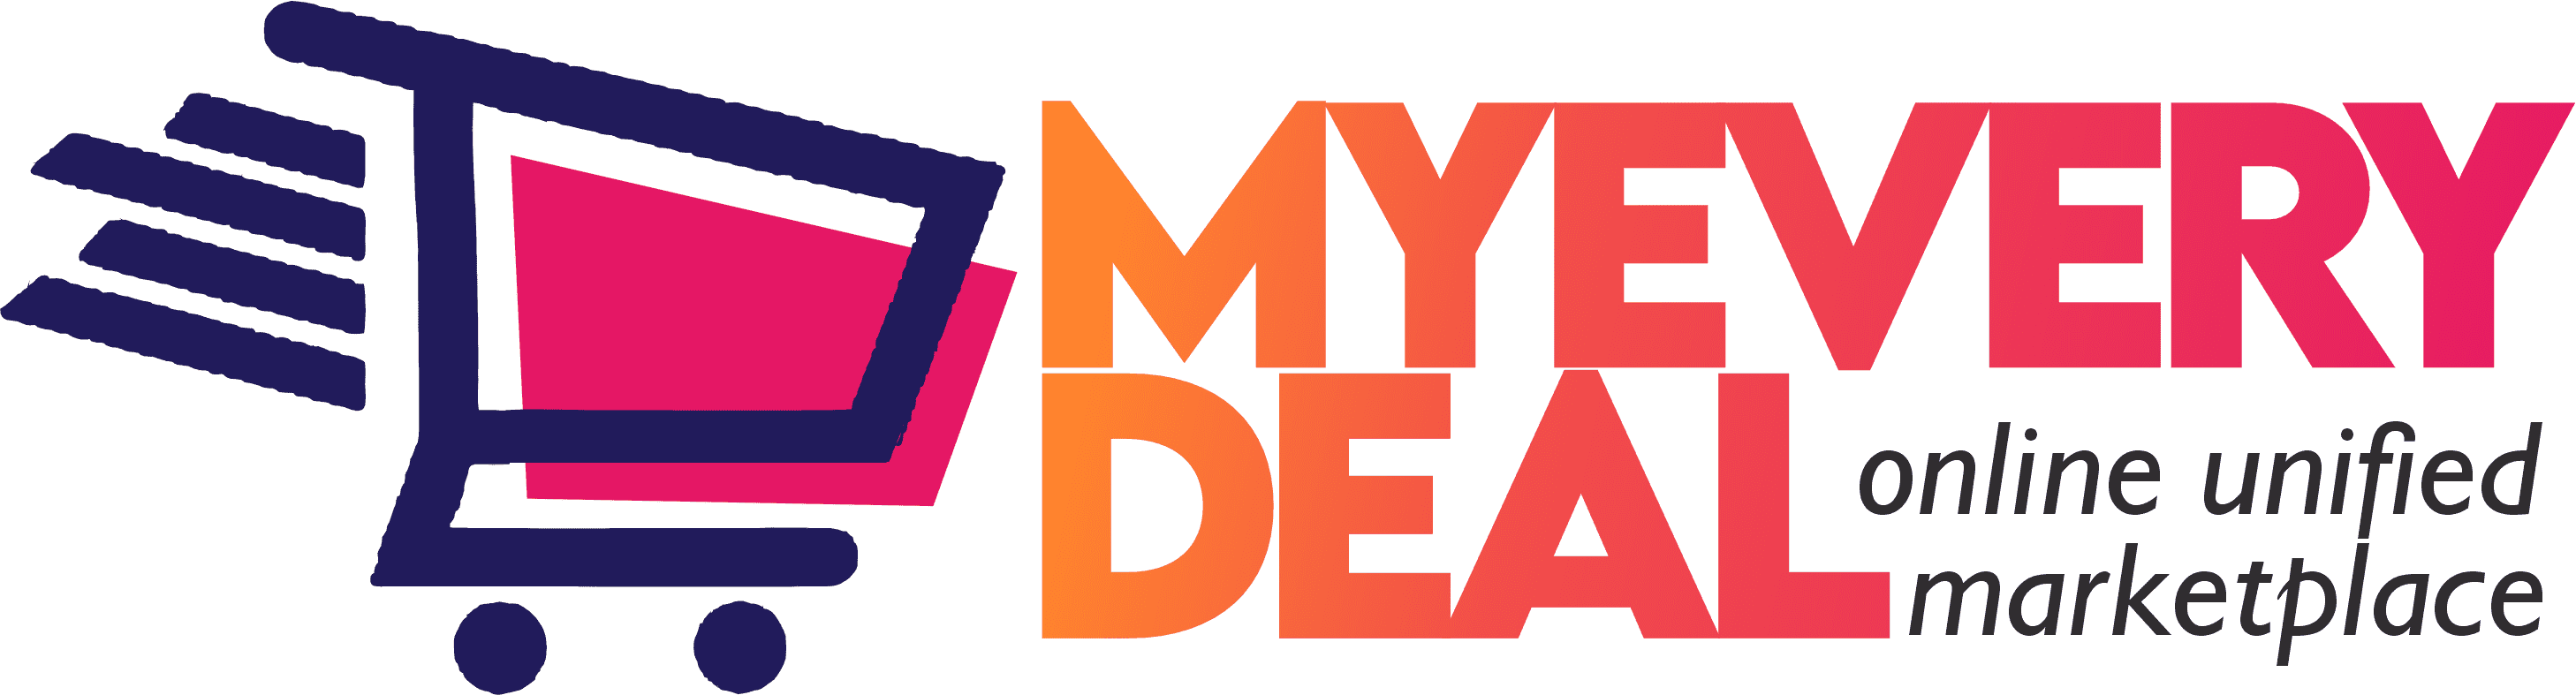 MyEveryDeal Online Marketplace